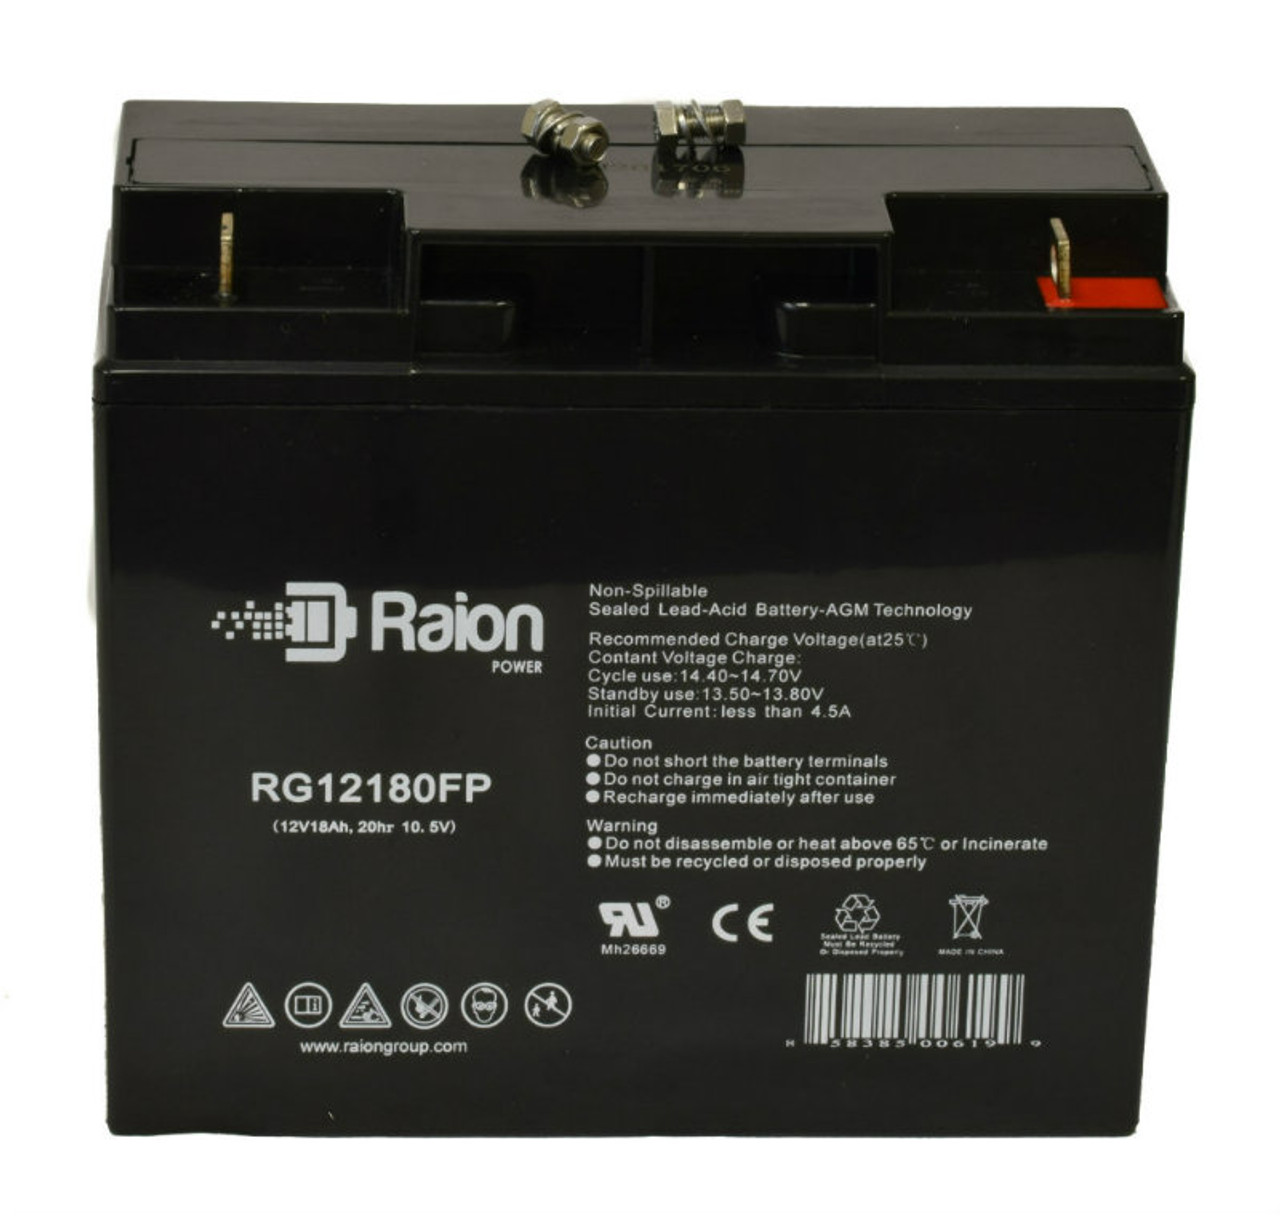 Raion Power RG12180FP 12V 18Ah Lead Acid Battery for Makita UM401DW Lawn Mower